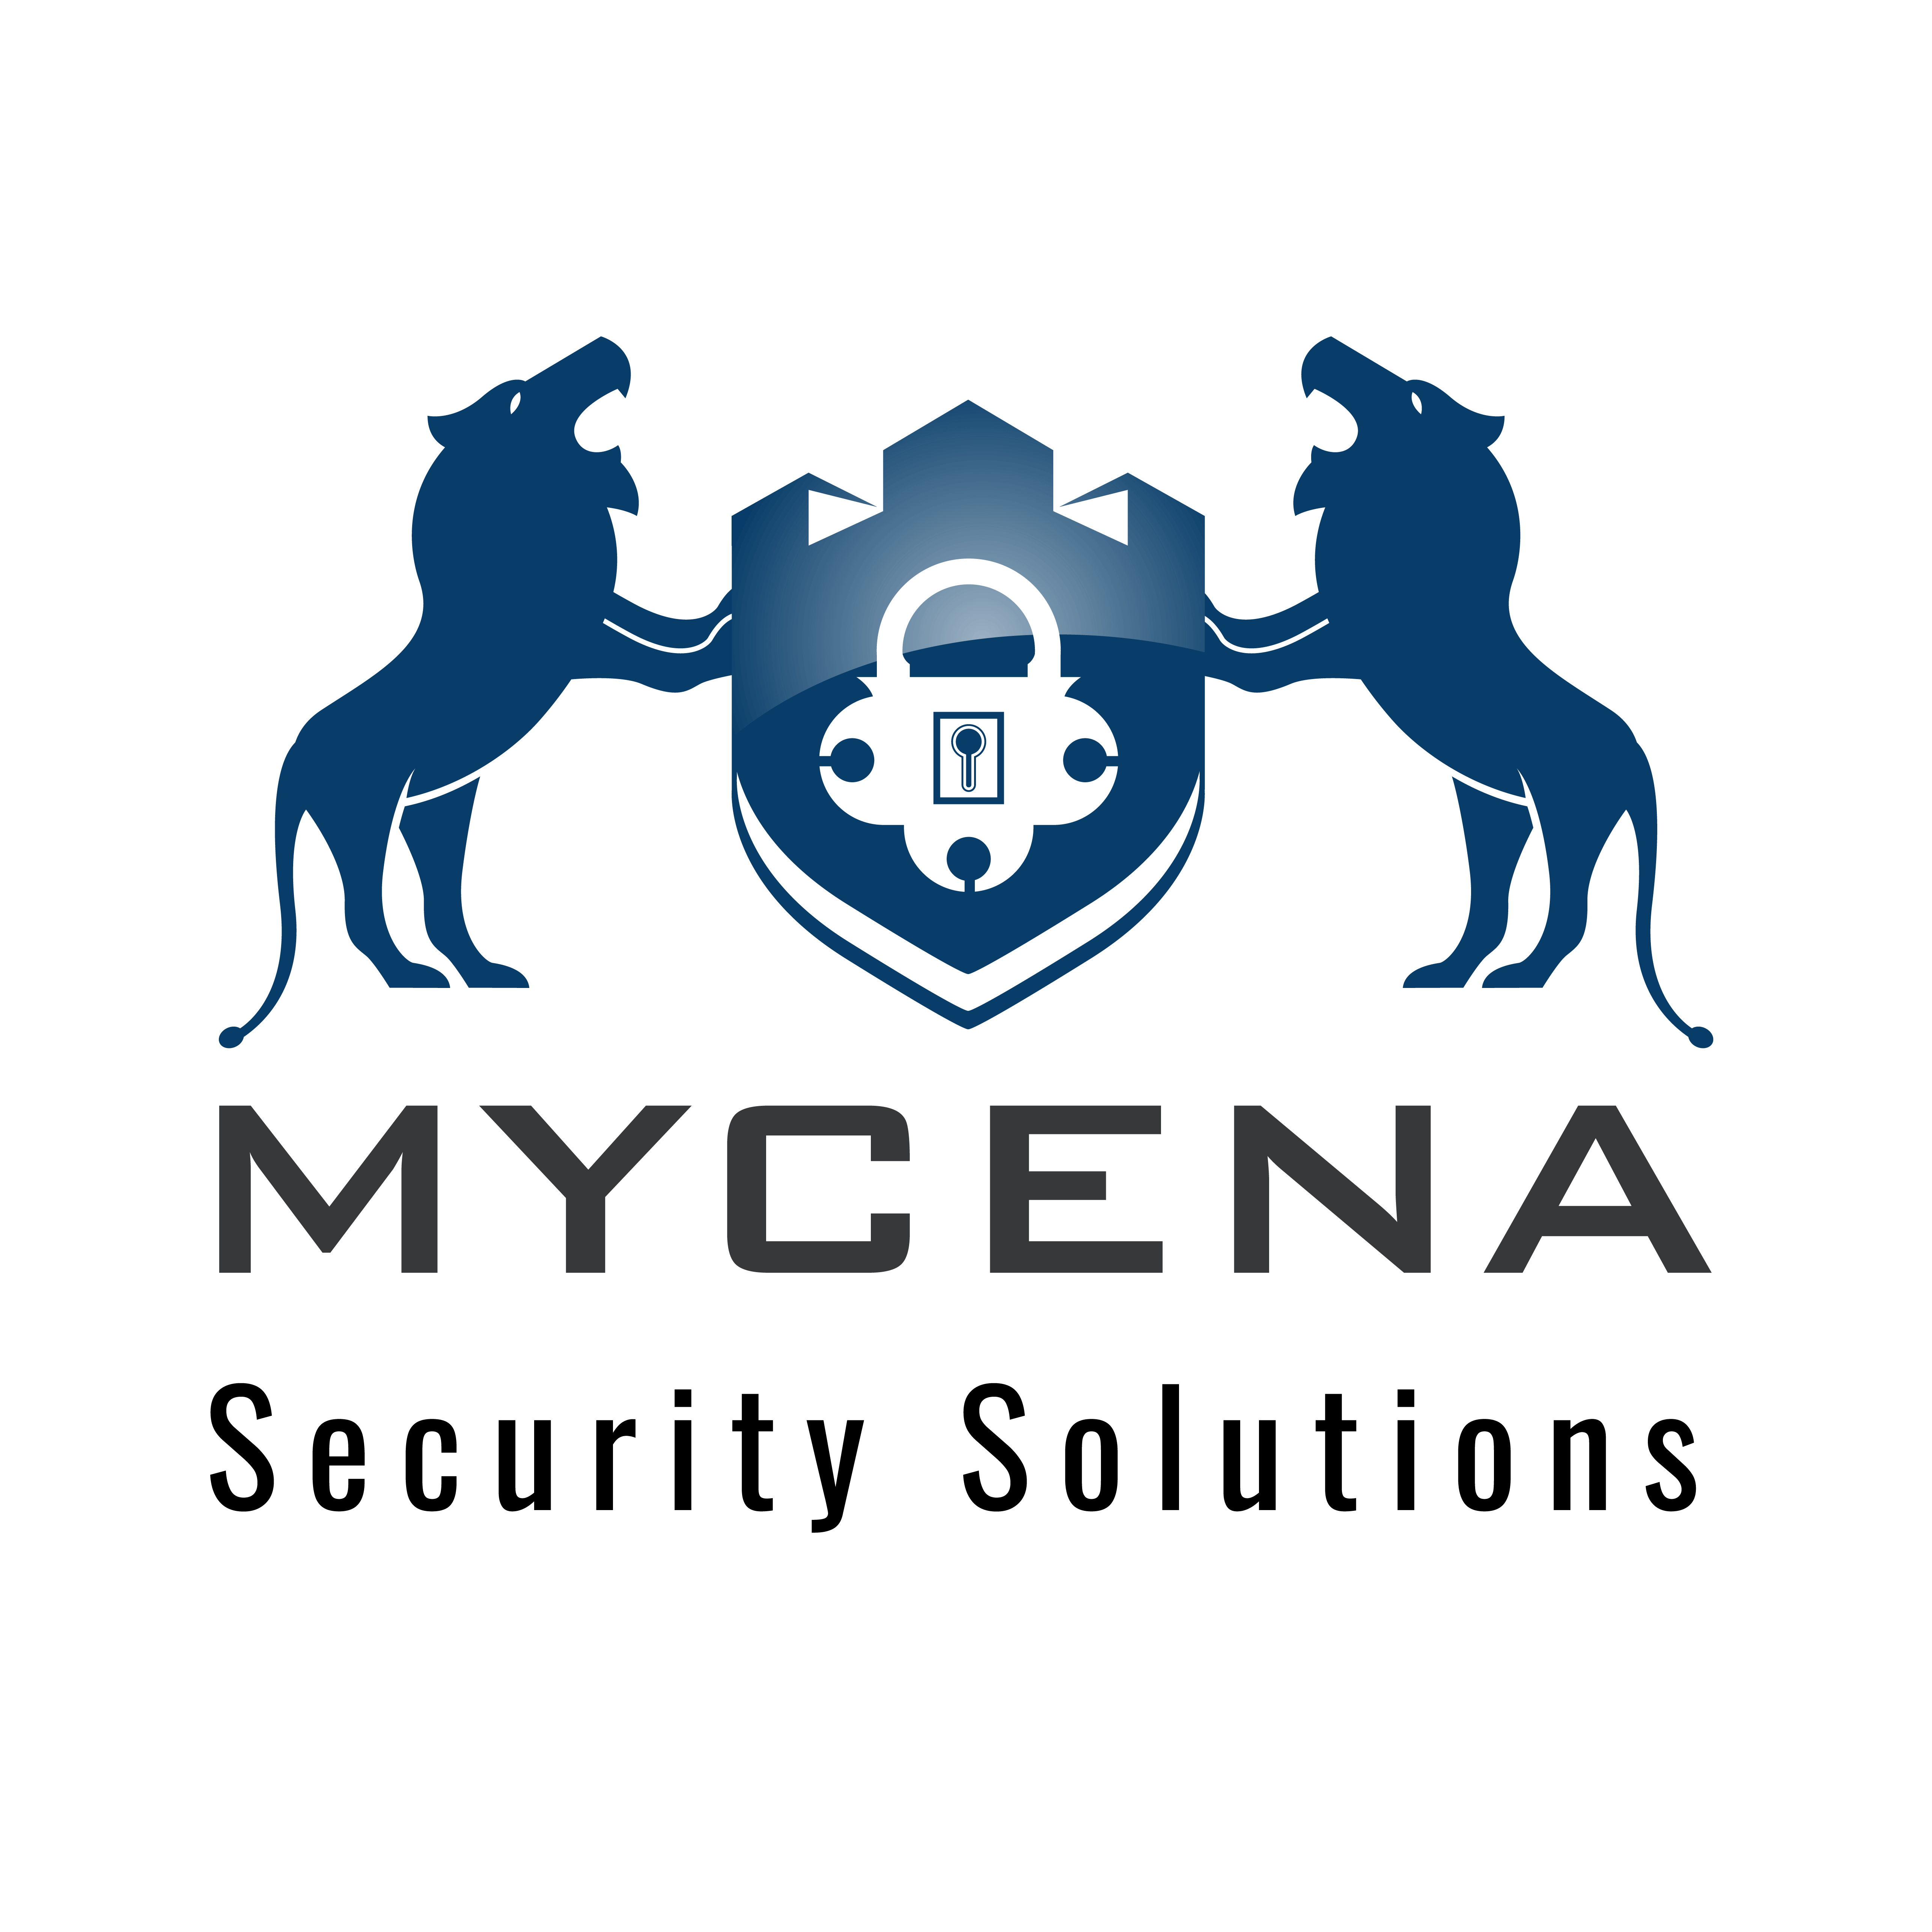 Mycena